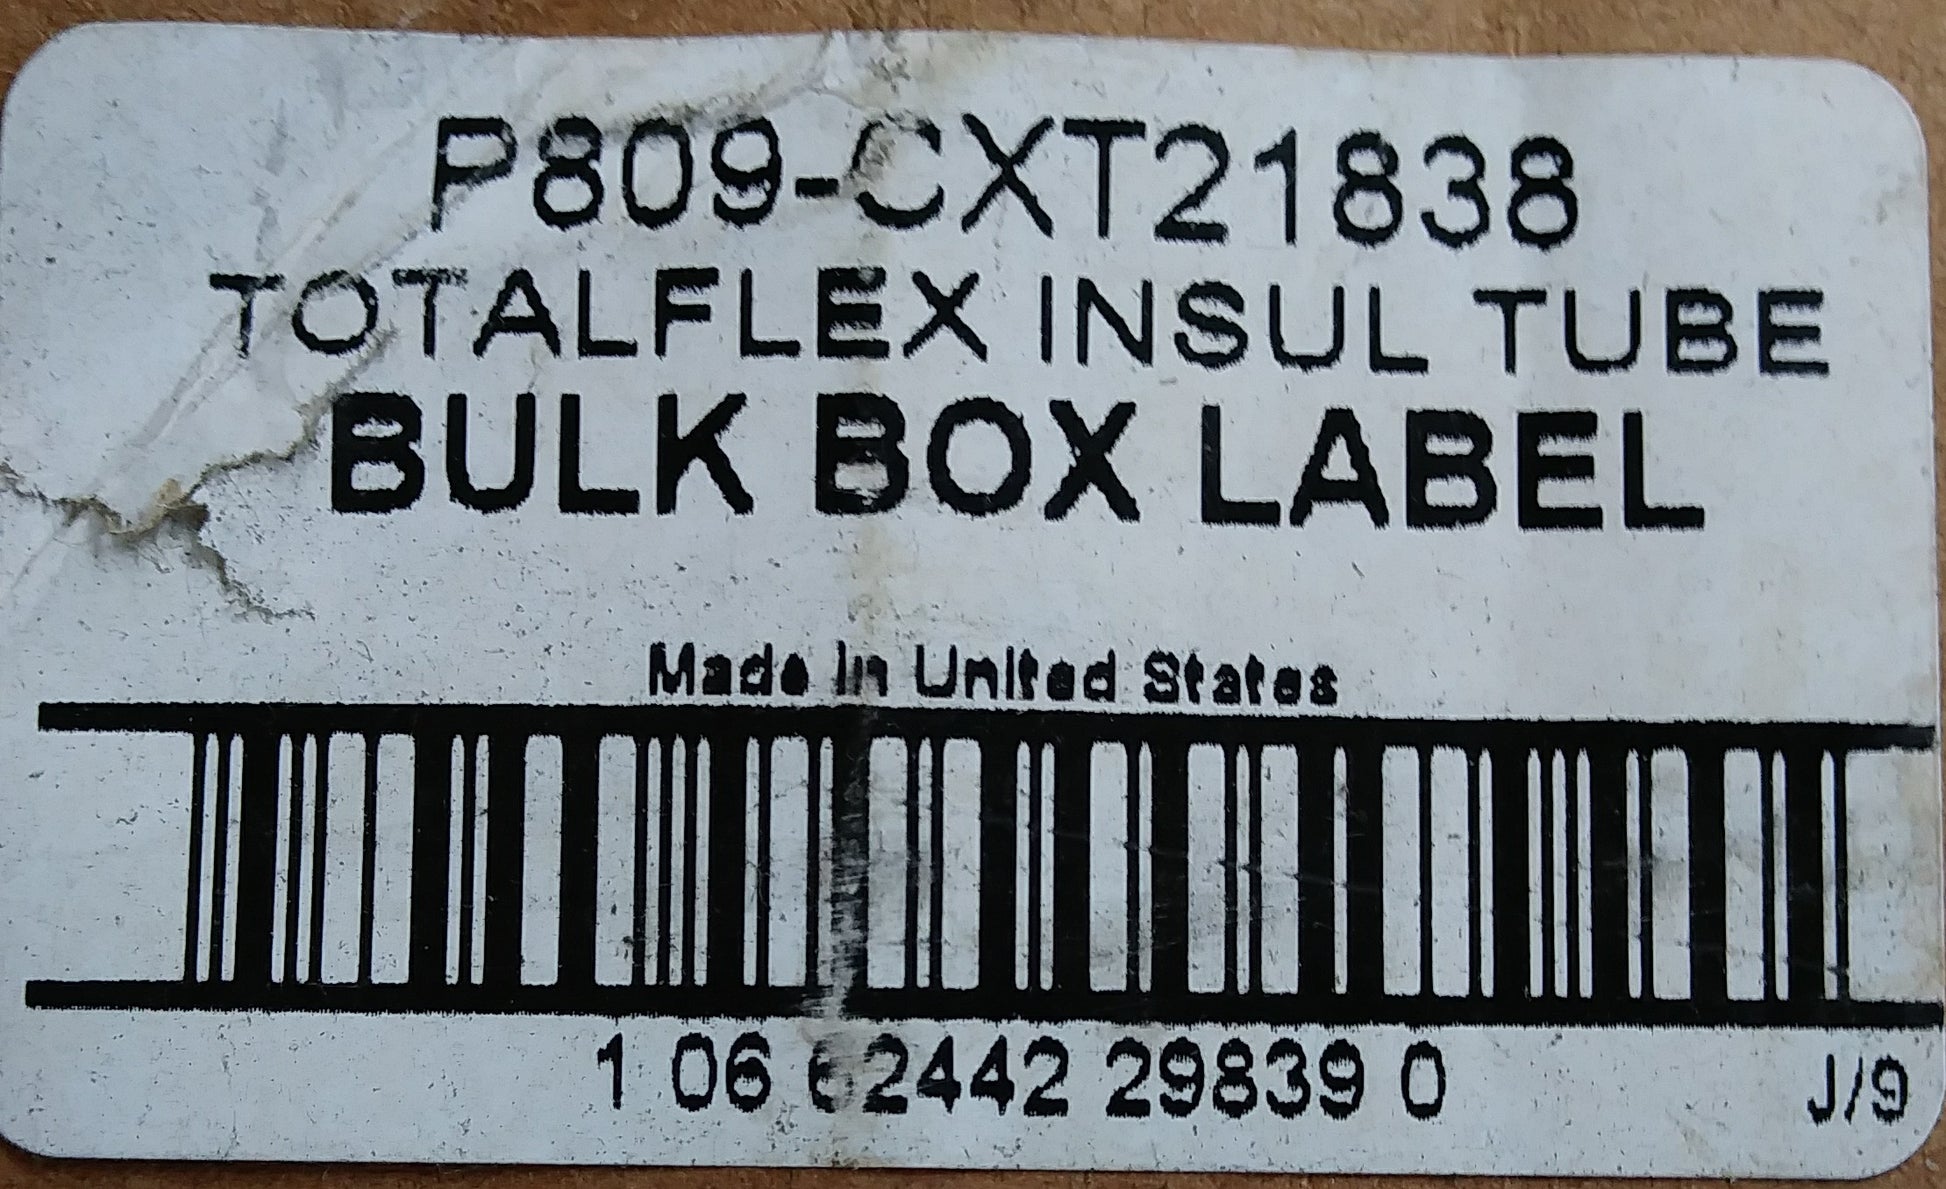 6' TOTALFLEX COPPER TUBE INSULATION (BOX OF 16), 2-1/8" INNER DIAMETER